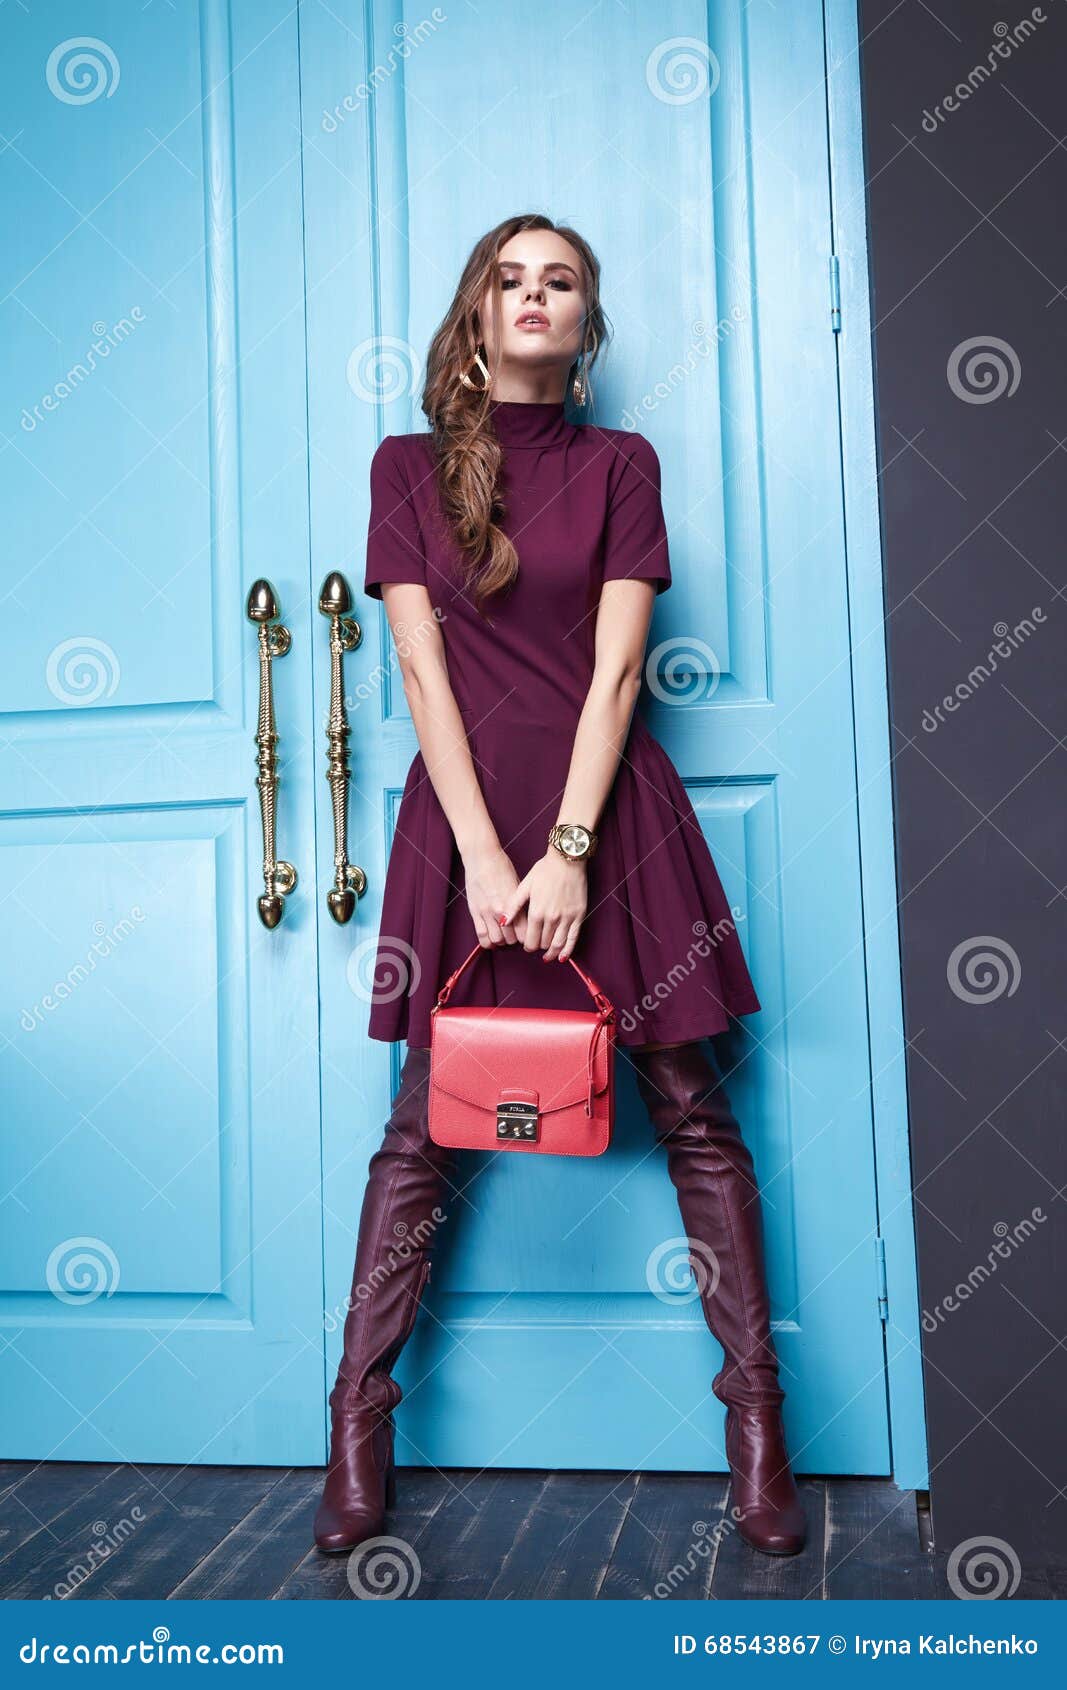 Beauty Dress Clothing Makeup Fashion Style Woman Stock Image - Image of ...